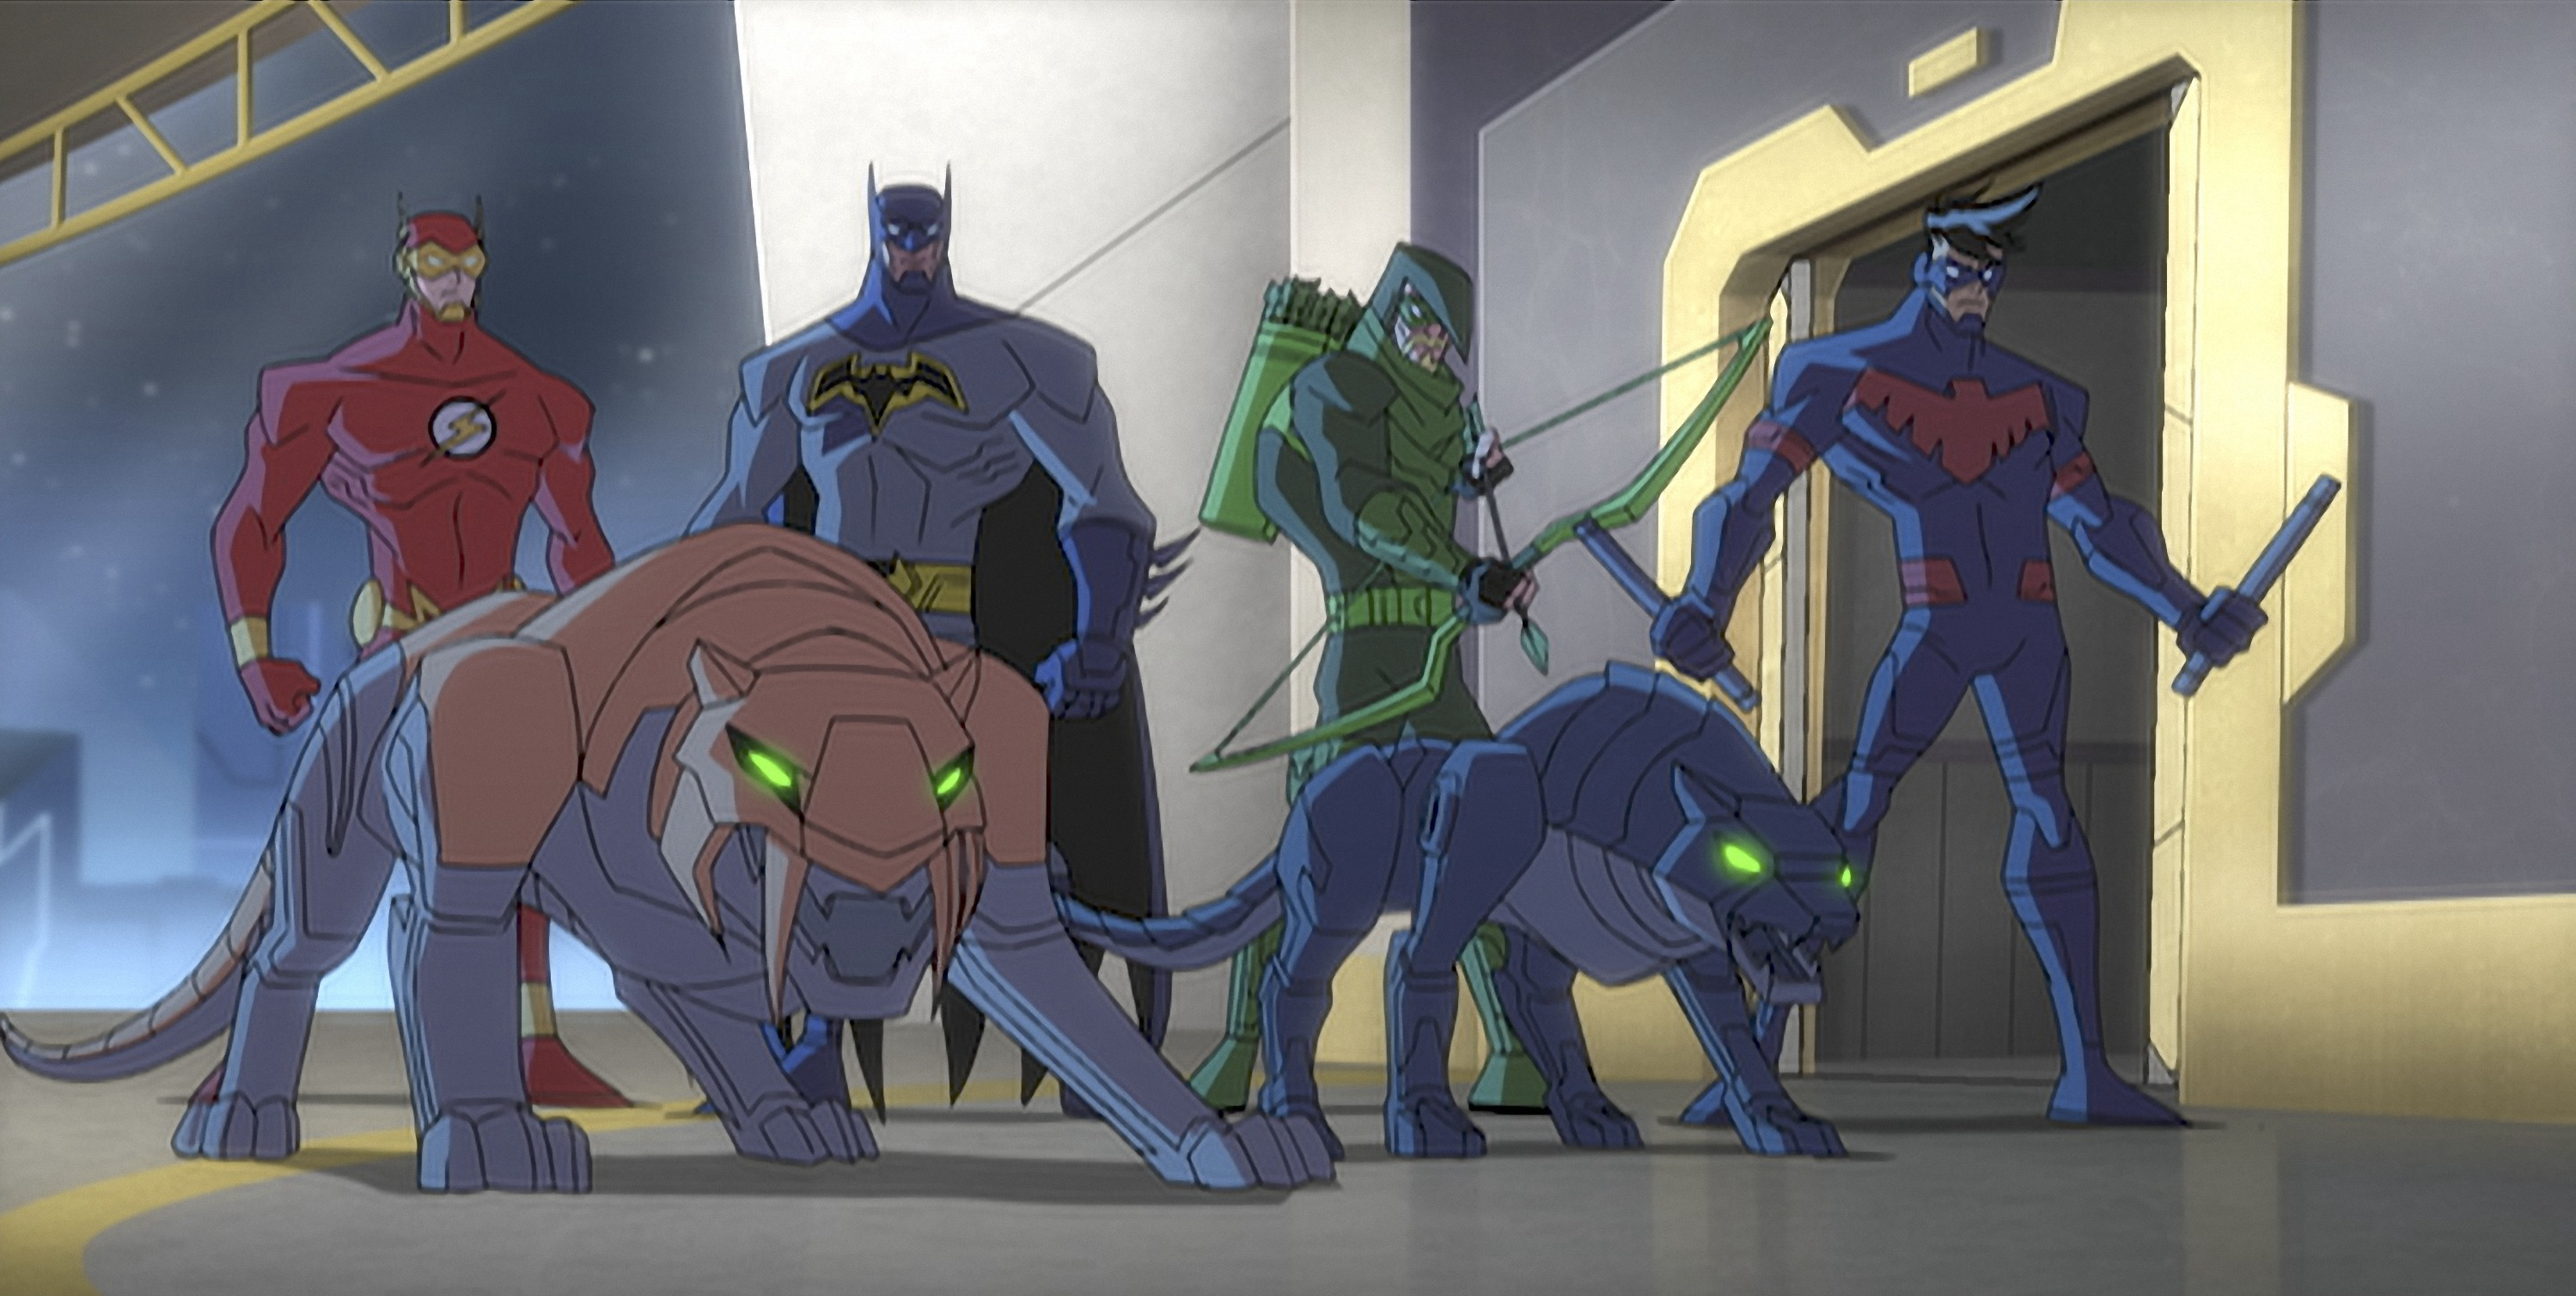 Batman Unlimited: Bản Năng Thú Tính - Batman Unlimited: Animal Instincts